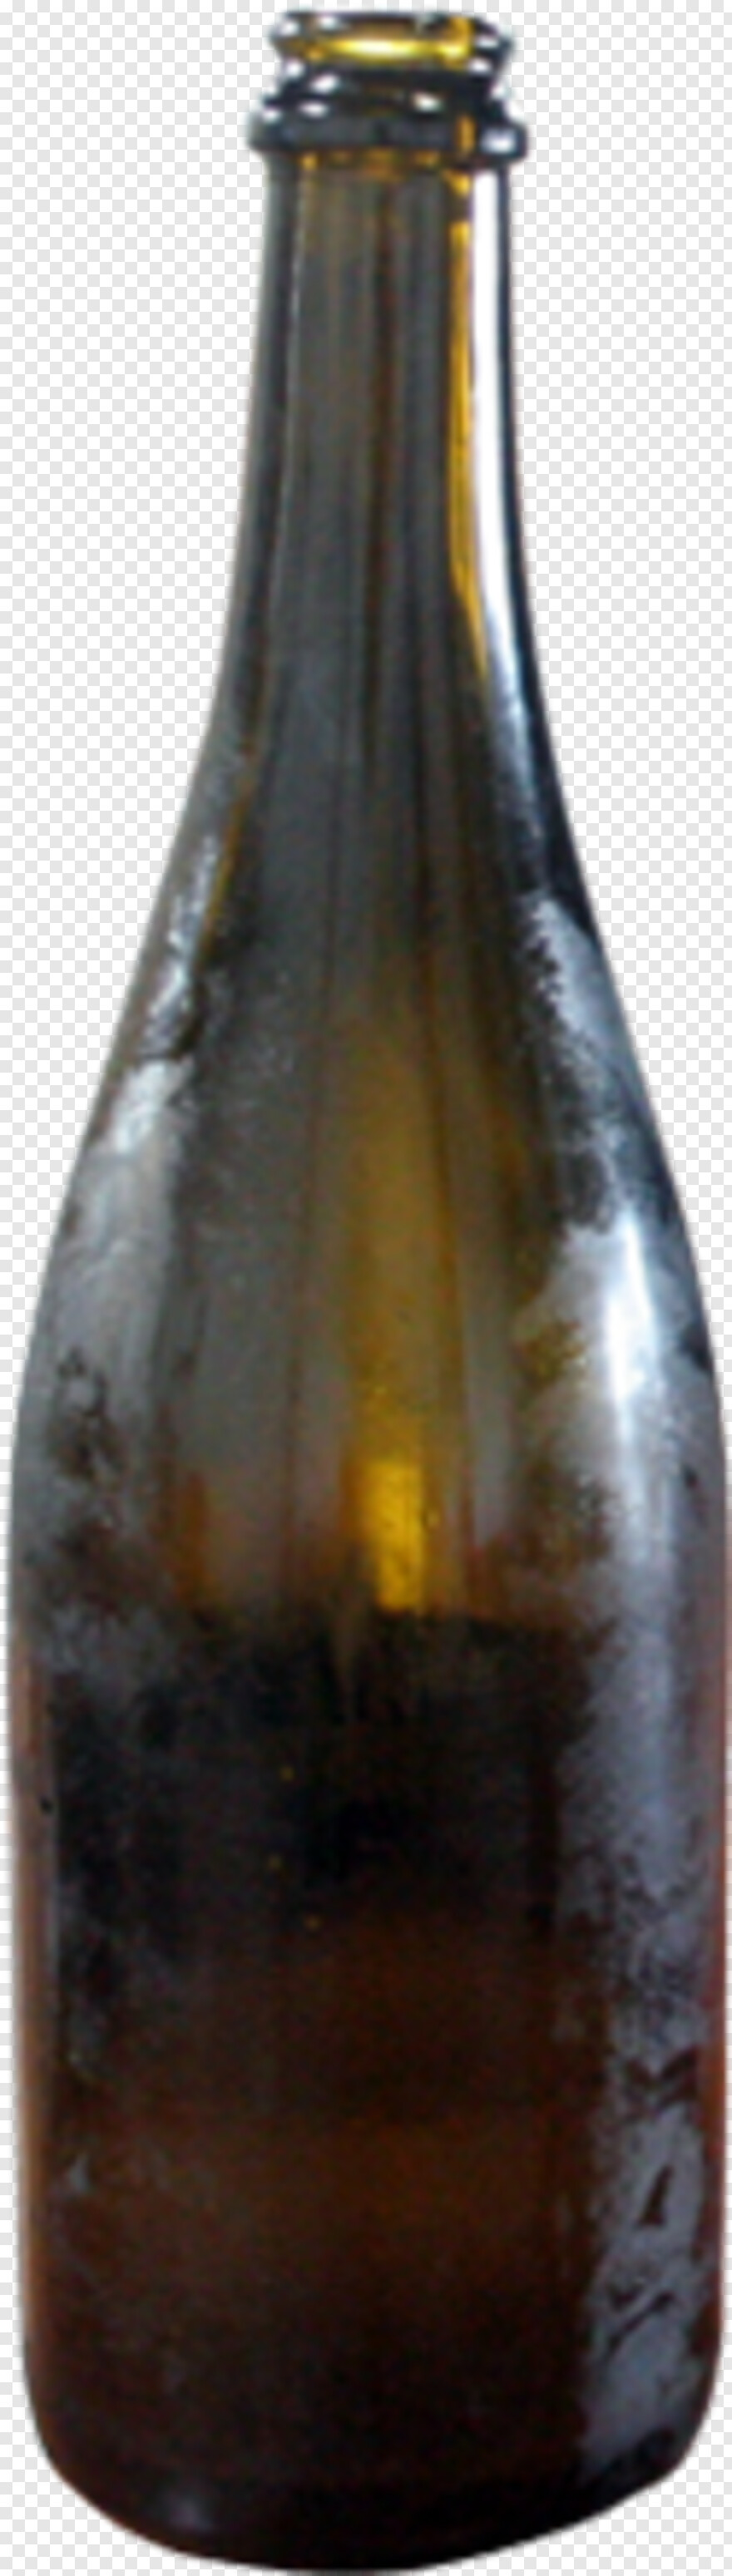  Beer Mug Clip Art, Beer, Beer Glass, Beer Can, Beer Bottle Vector, Modelo Beer